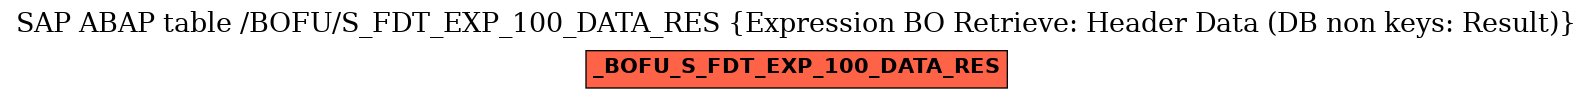 E-R Diagram for table /BOFU/S_FDT_EXP_100_DATA_RES (Expression BO Retrieve: Header Data (DB non keys: Result))